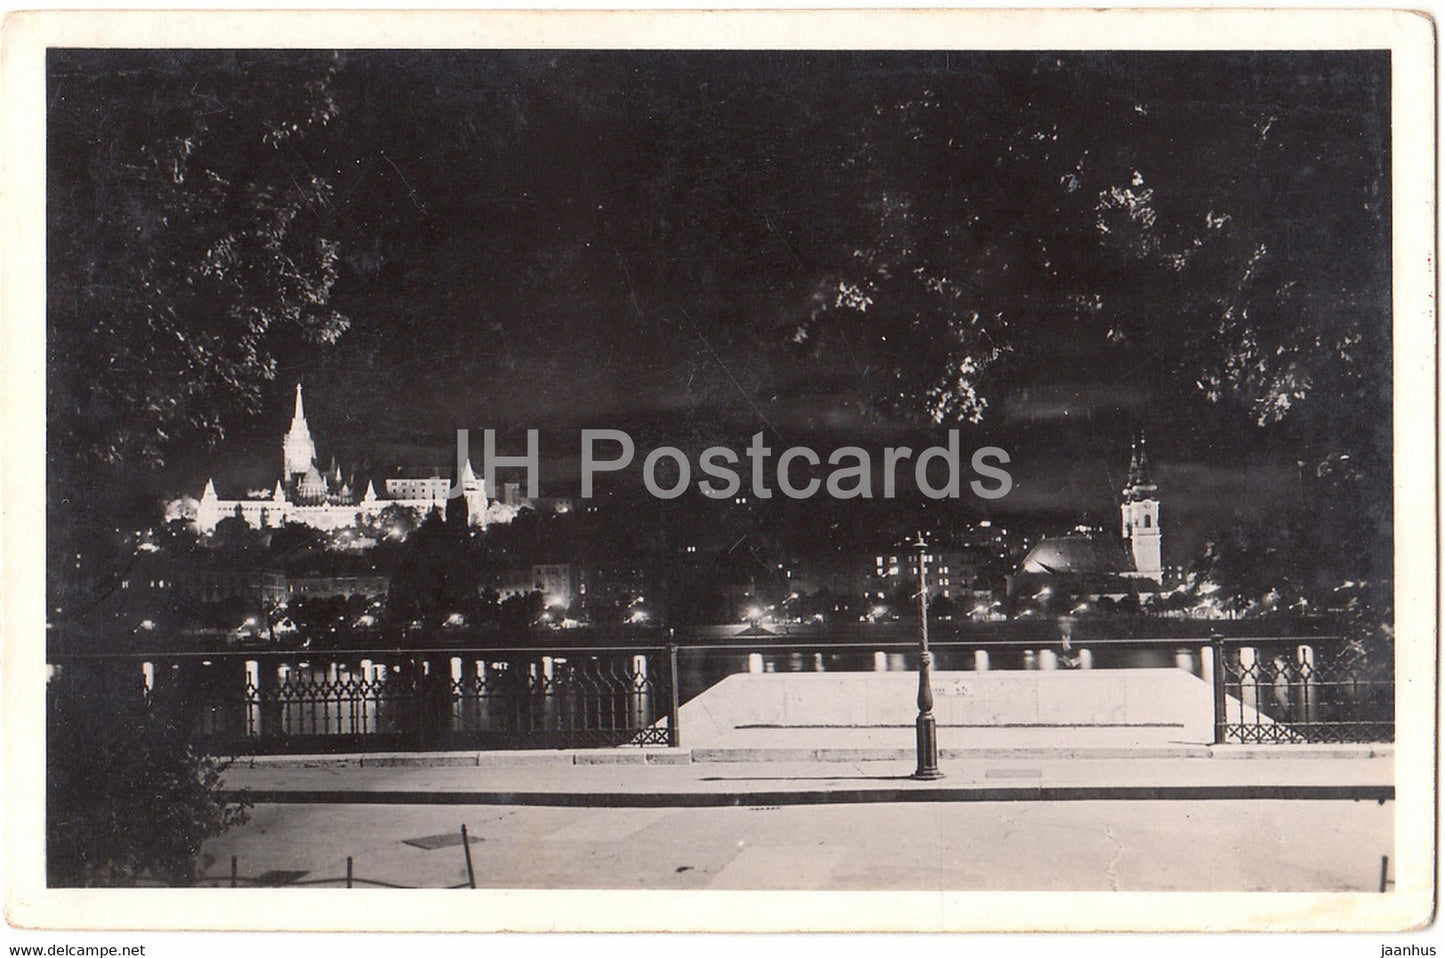 Budapest - A kivilagitott Halaszbastya - The Fishers Bastion illuminated - old postcard - Hungary - unused - JH Postcards